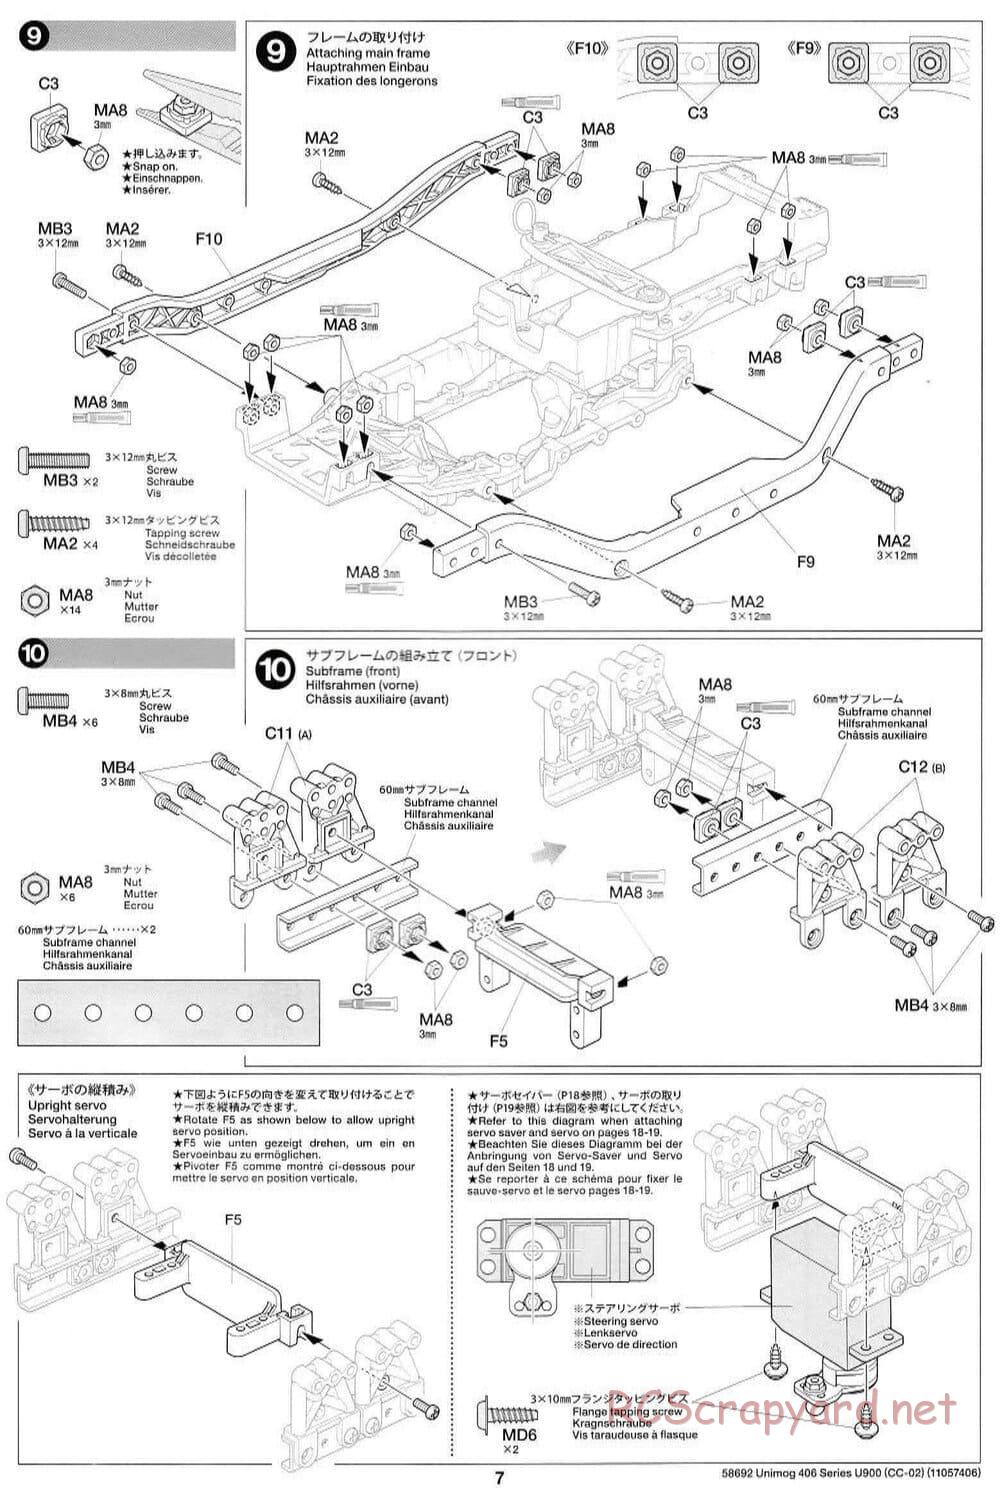 Tamiya - Mercedes-Benz Unimog 406 Series U900 - CC-02 Chassis - Manual - Page 7